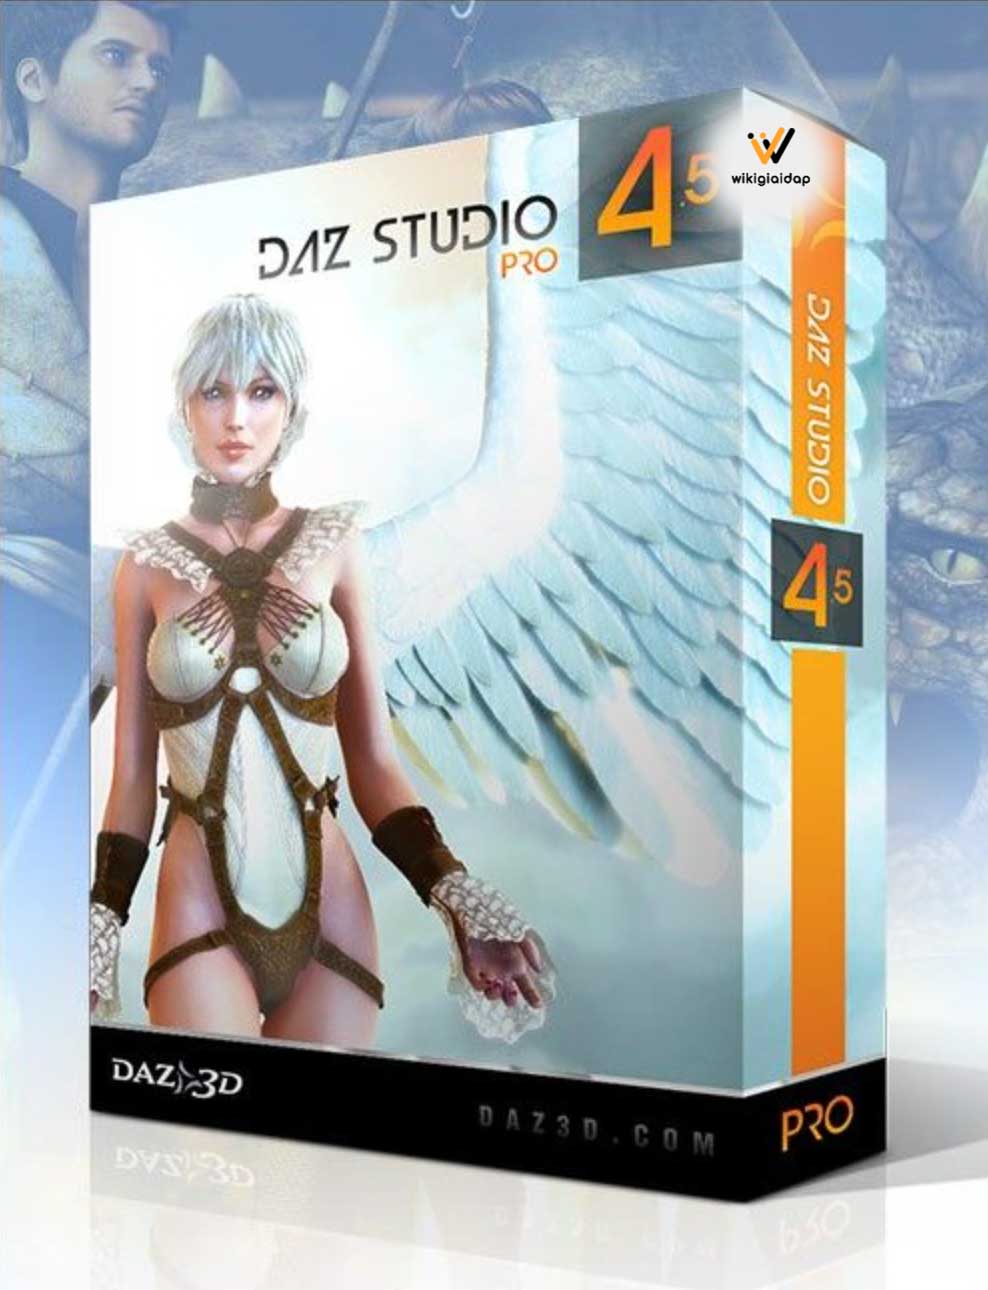 Tổng quan về phần mềm DAZ Studio Pro 4